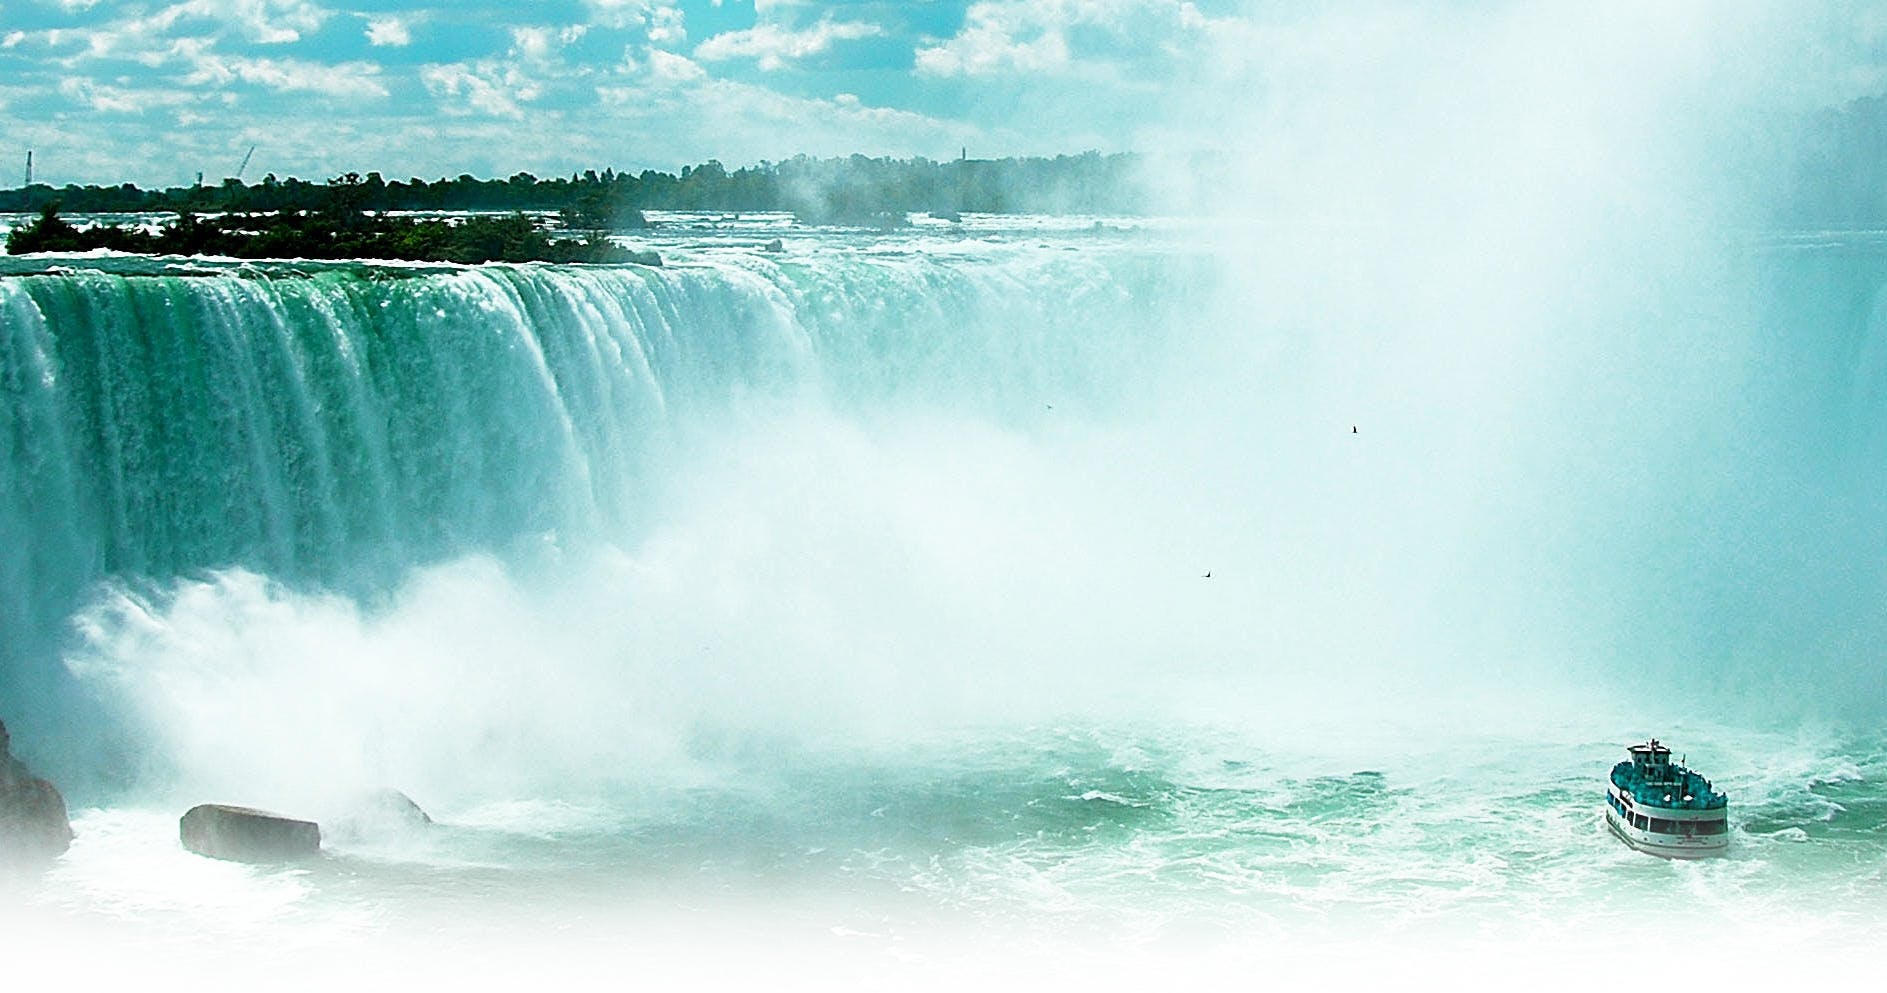 Niagara Falls-tour met boottocht en lunch vanuit Toronto